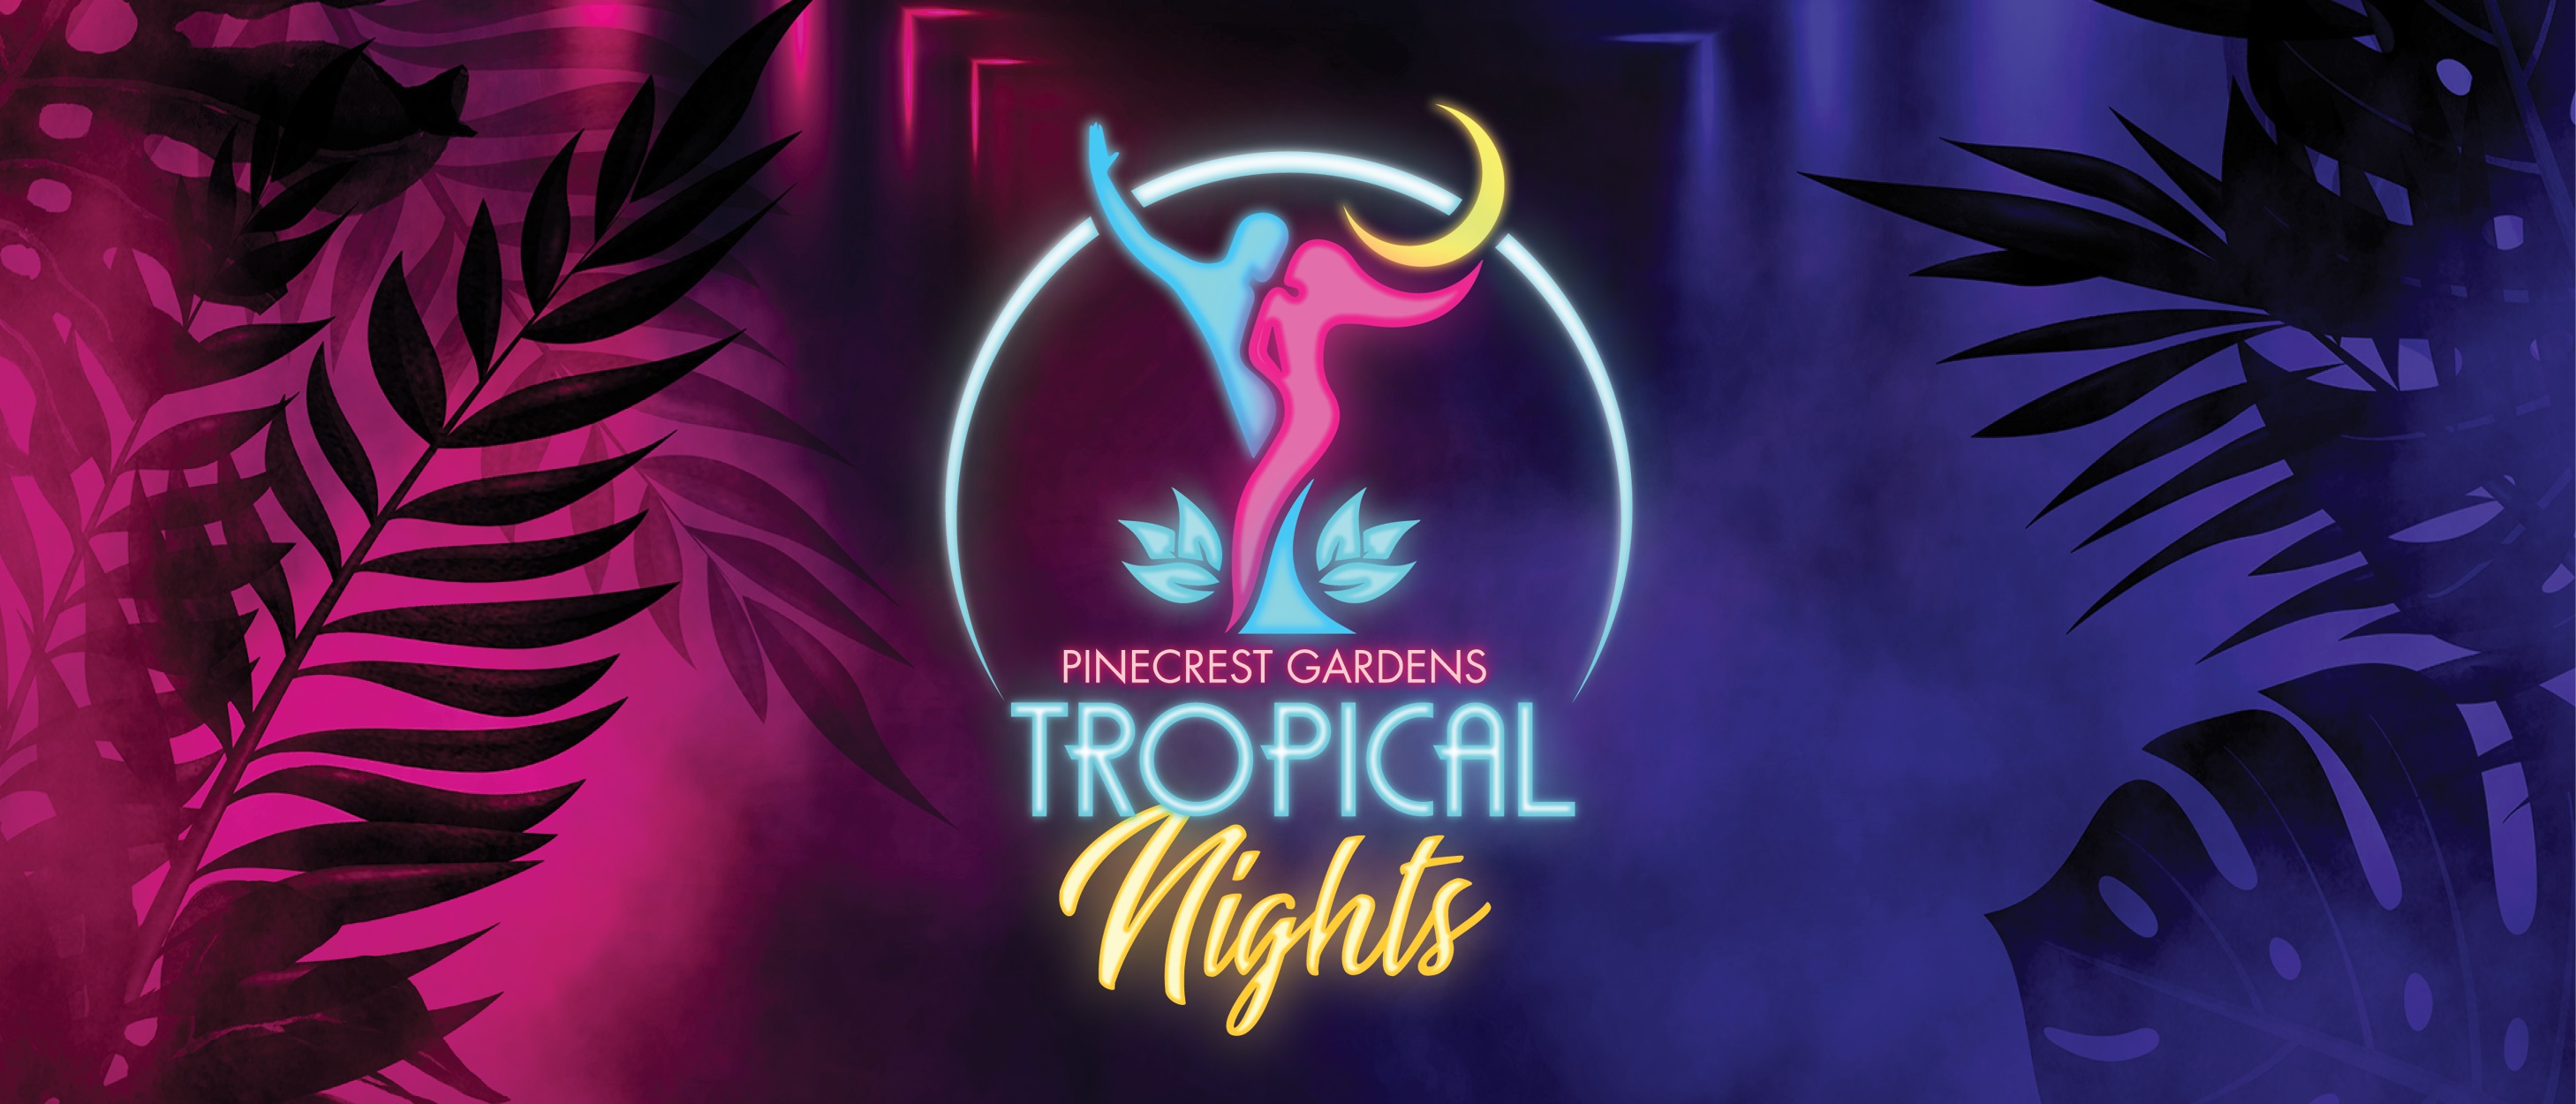 PG-CTS-Tropical Nights Ticket.jpg